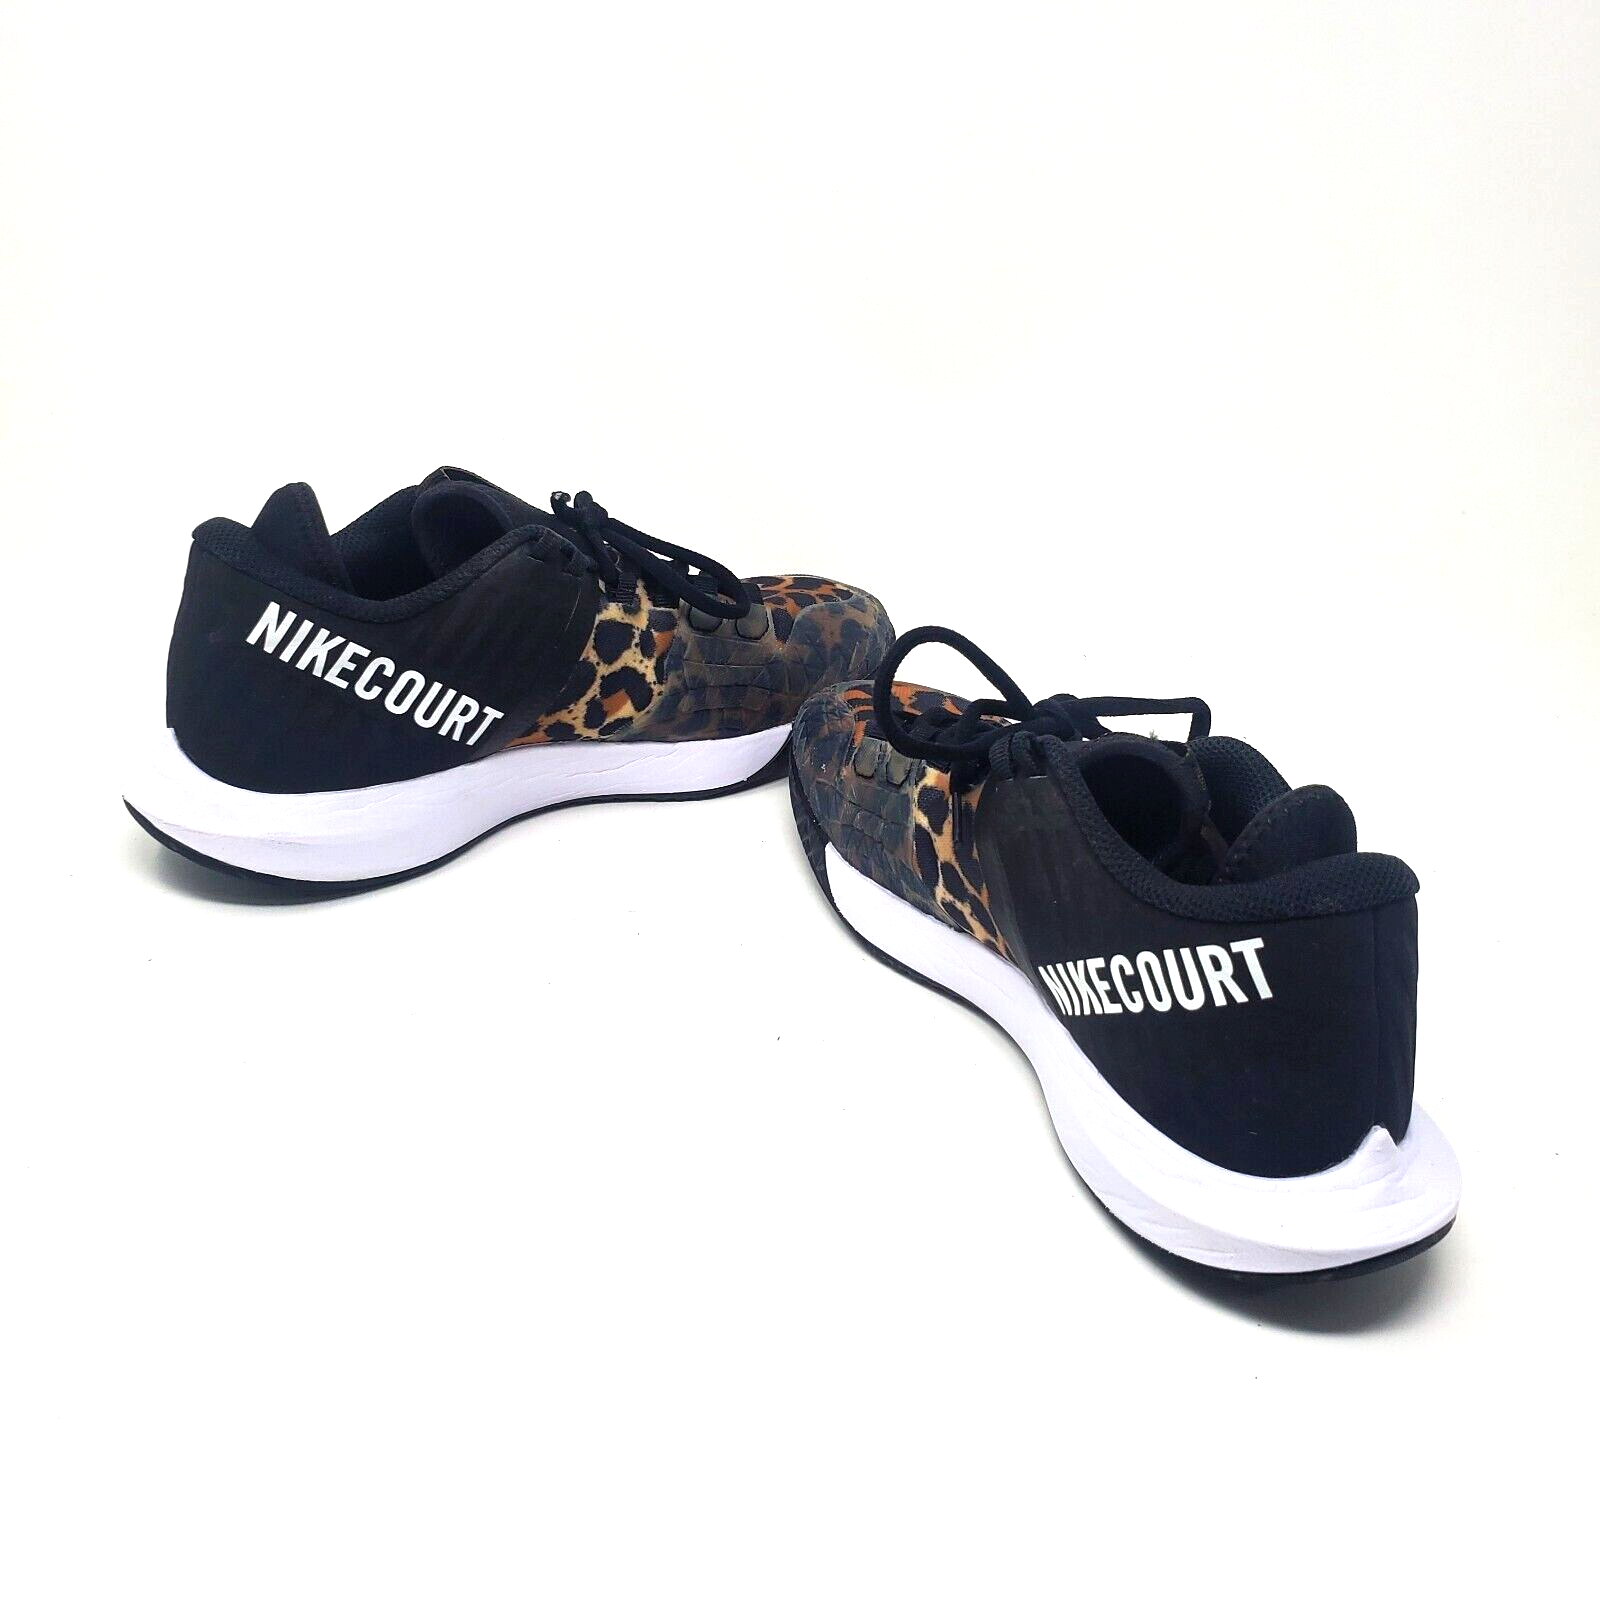 Nike Air Zoom Womens Tennis Court Shoes Sneakers AA8022 702 Cheetah Print Sz 7.5